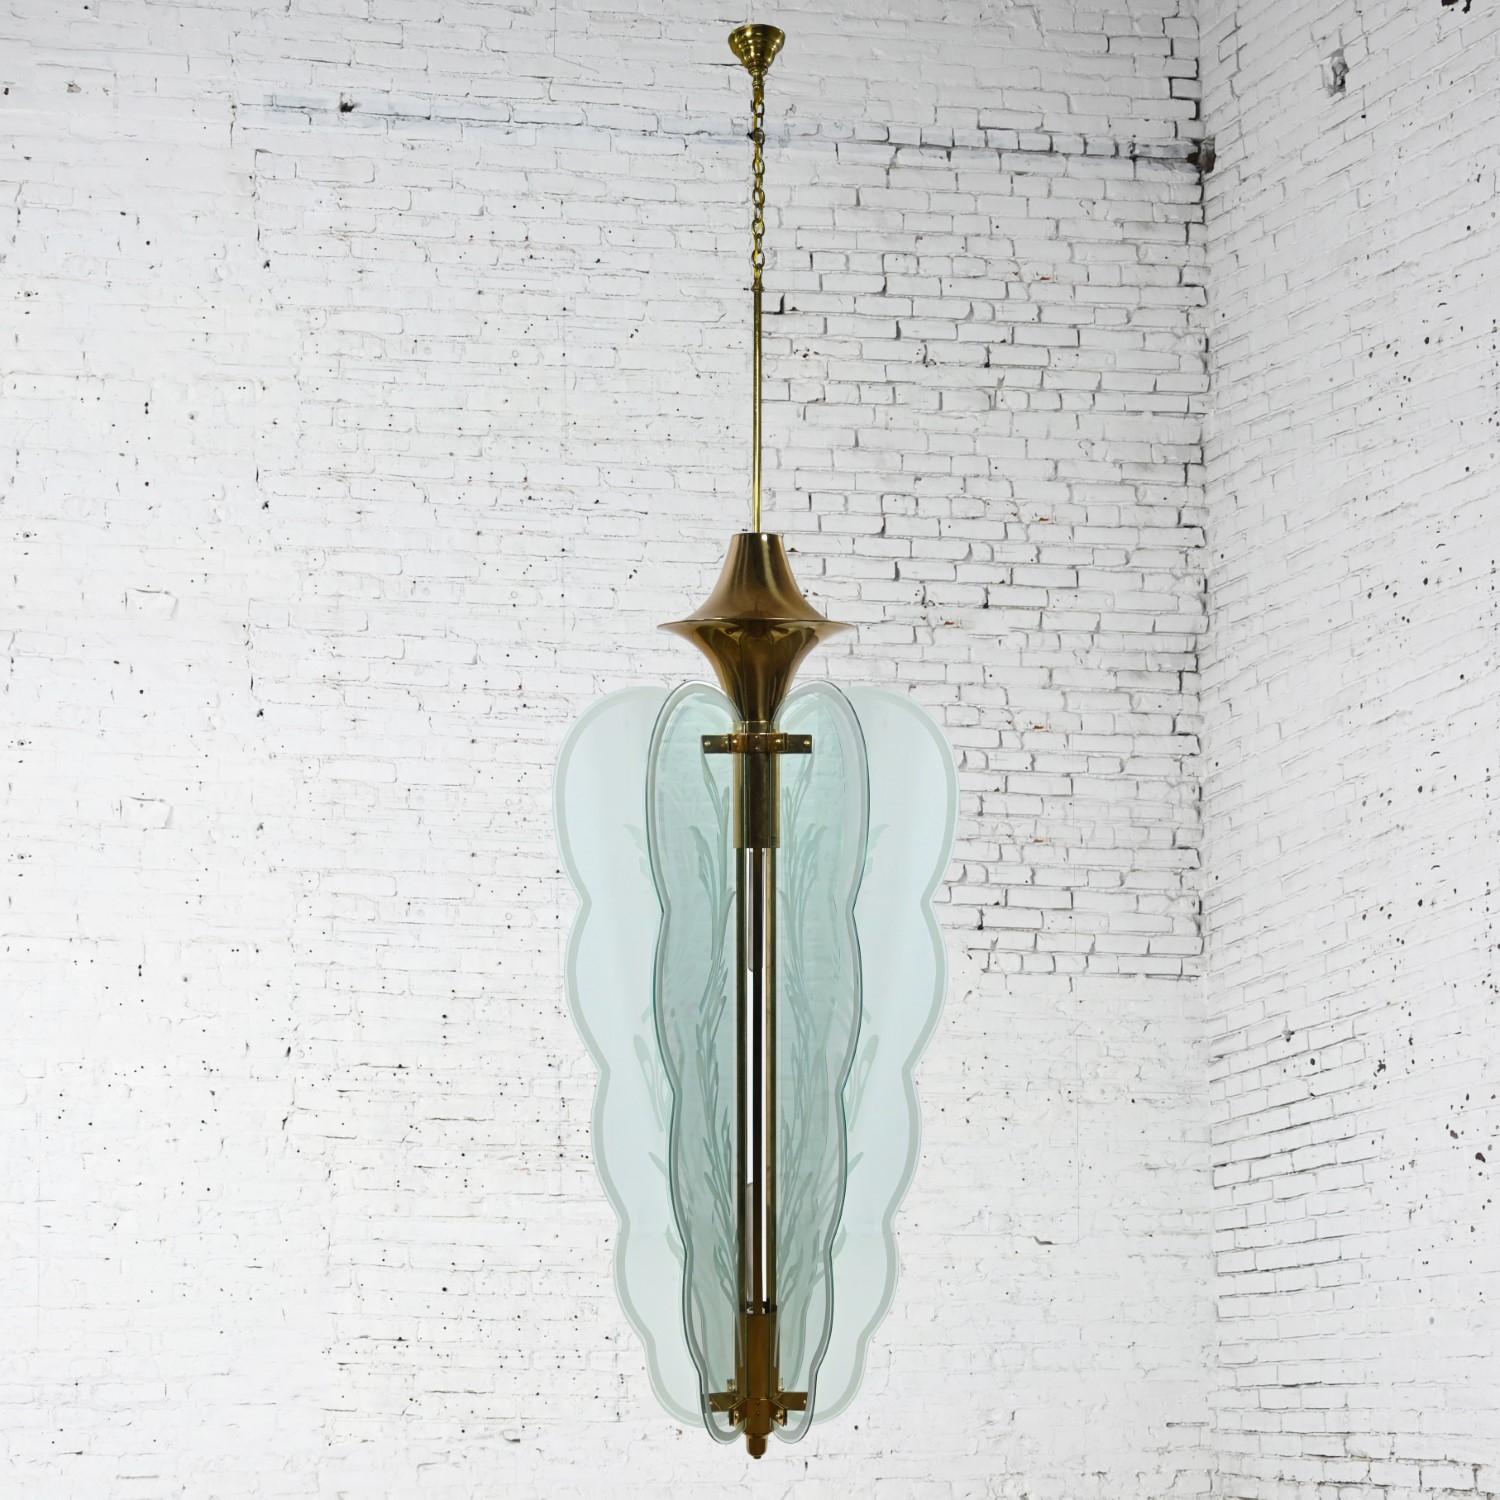 Art Deco Revival Monumental Brass Etched Glass Hanging Light Fixture Chandelier For Sale 5